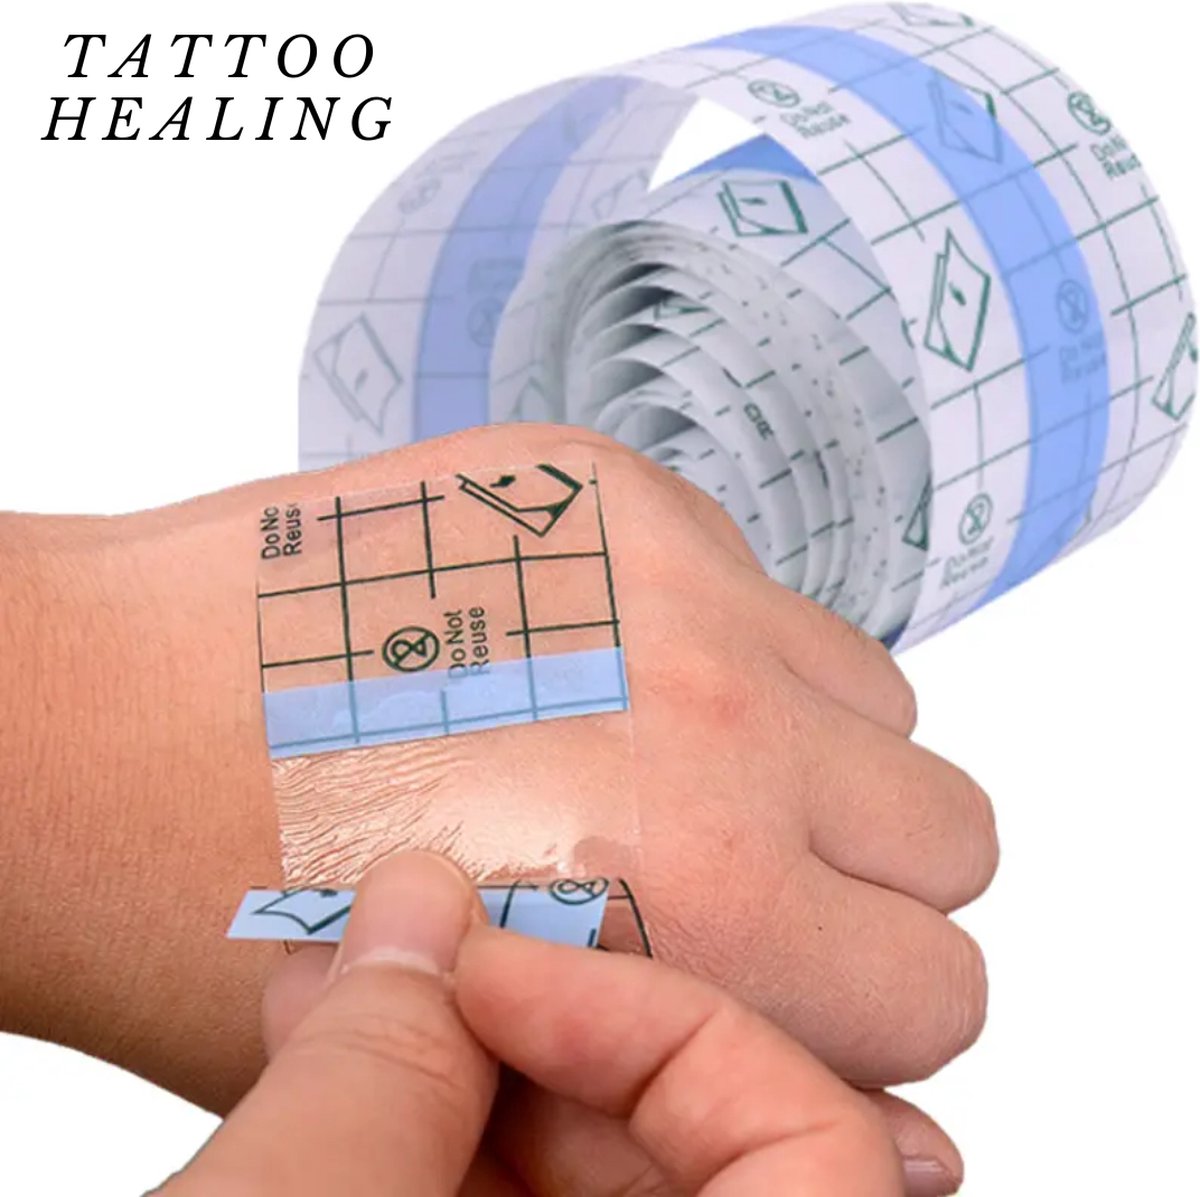 Tattoo Folie - Tatoeage Nazorg Folie - 5 Meter - Protection - Waterproof - Transparant - Filmlaagje - 1 Rol - Tattoo Verzorging - Tattoo Zwemfolie - After care - Bescherming - Houd je nieuwe tattoo lang mooi - Huidbescherming -